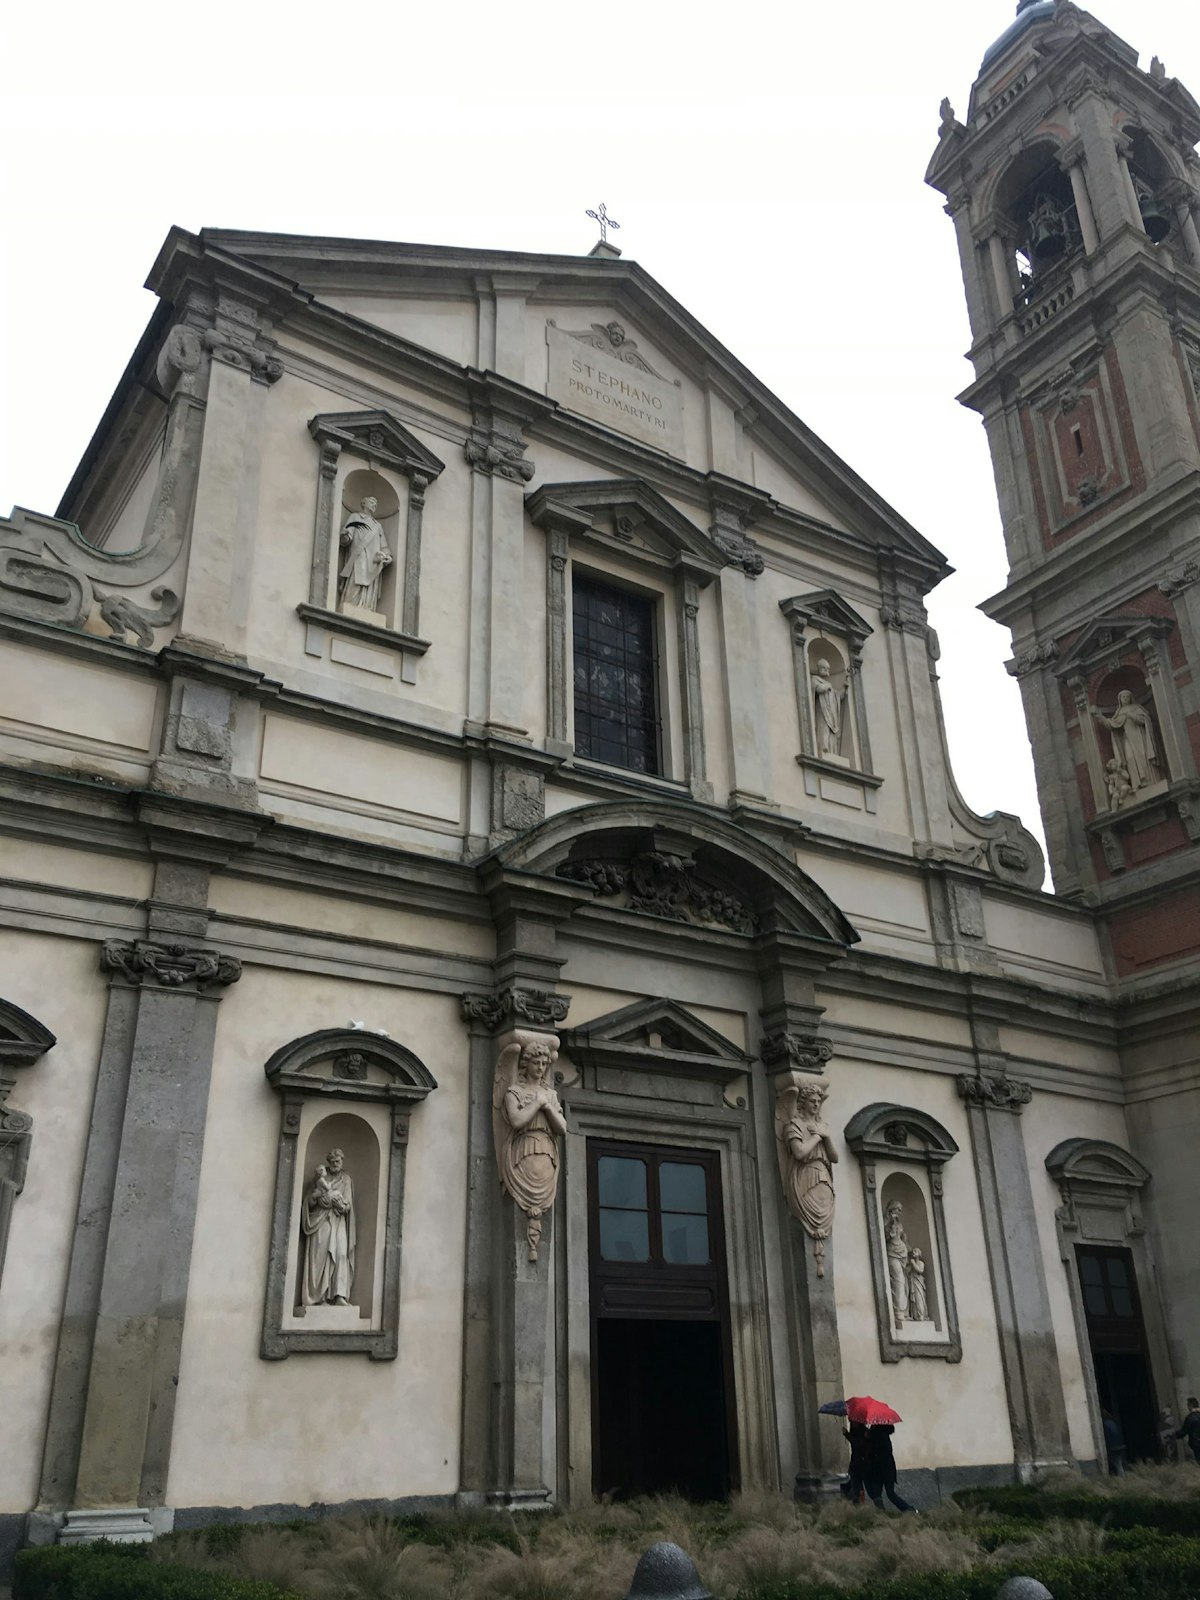 Entrance to the Chiesa di San Bernardino alle Ossa